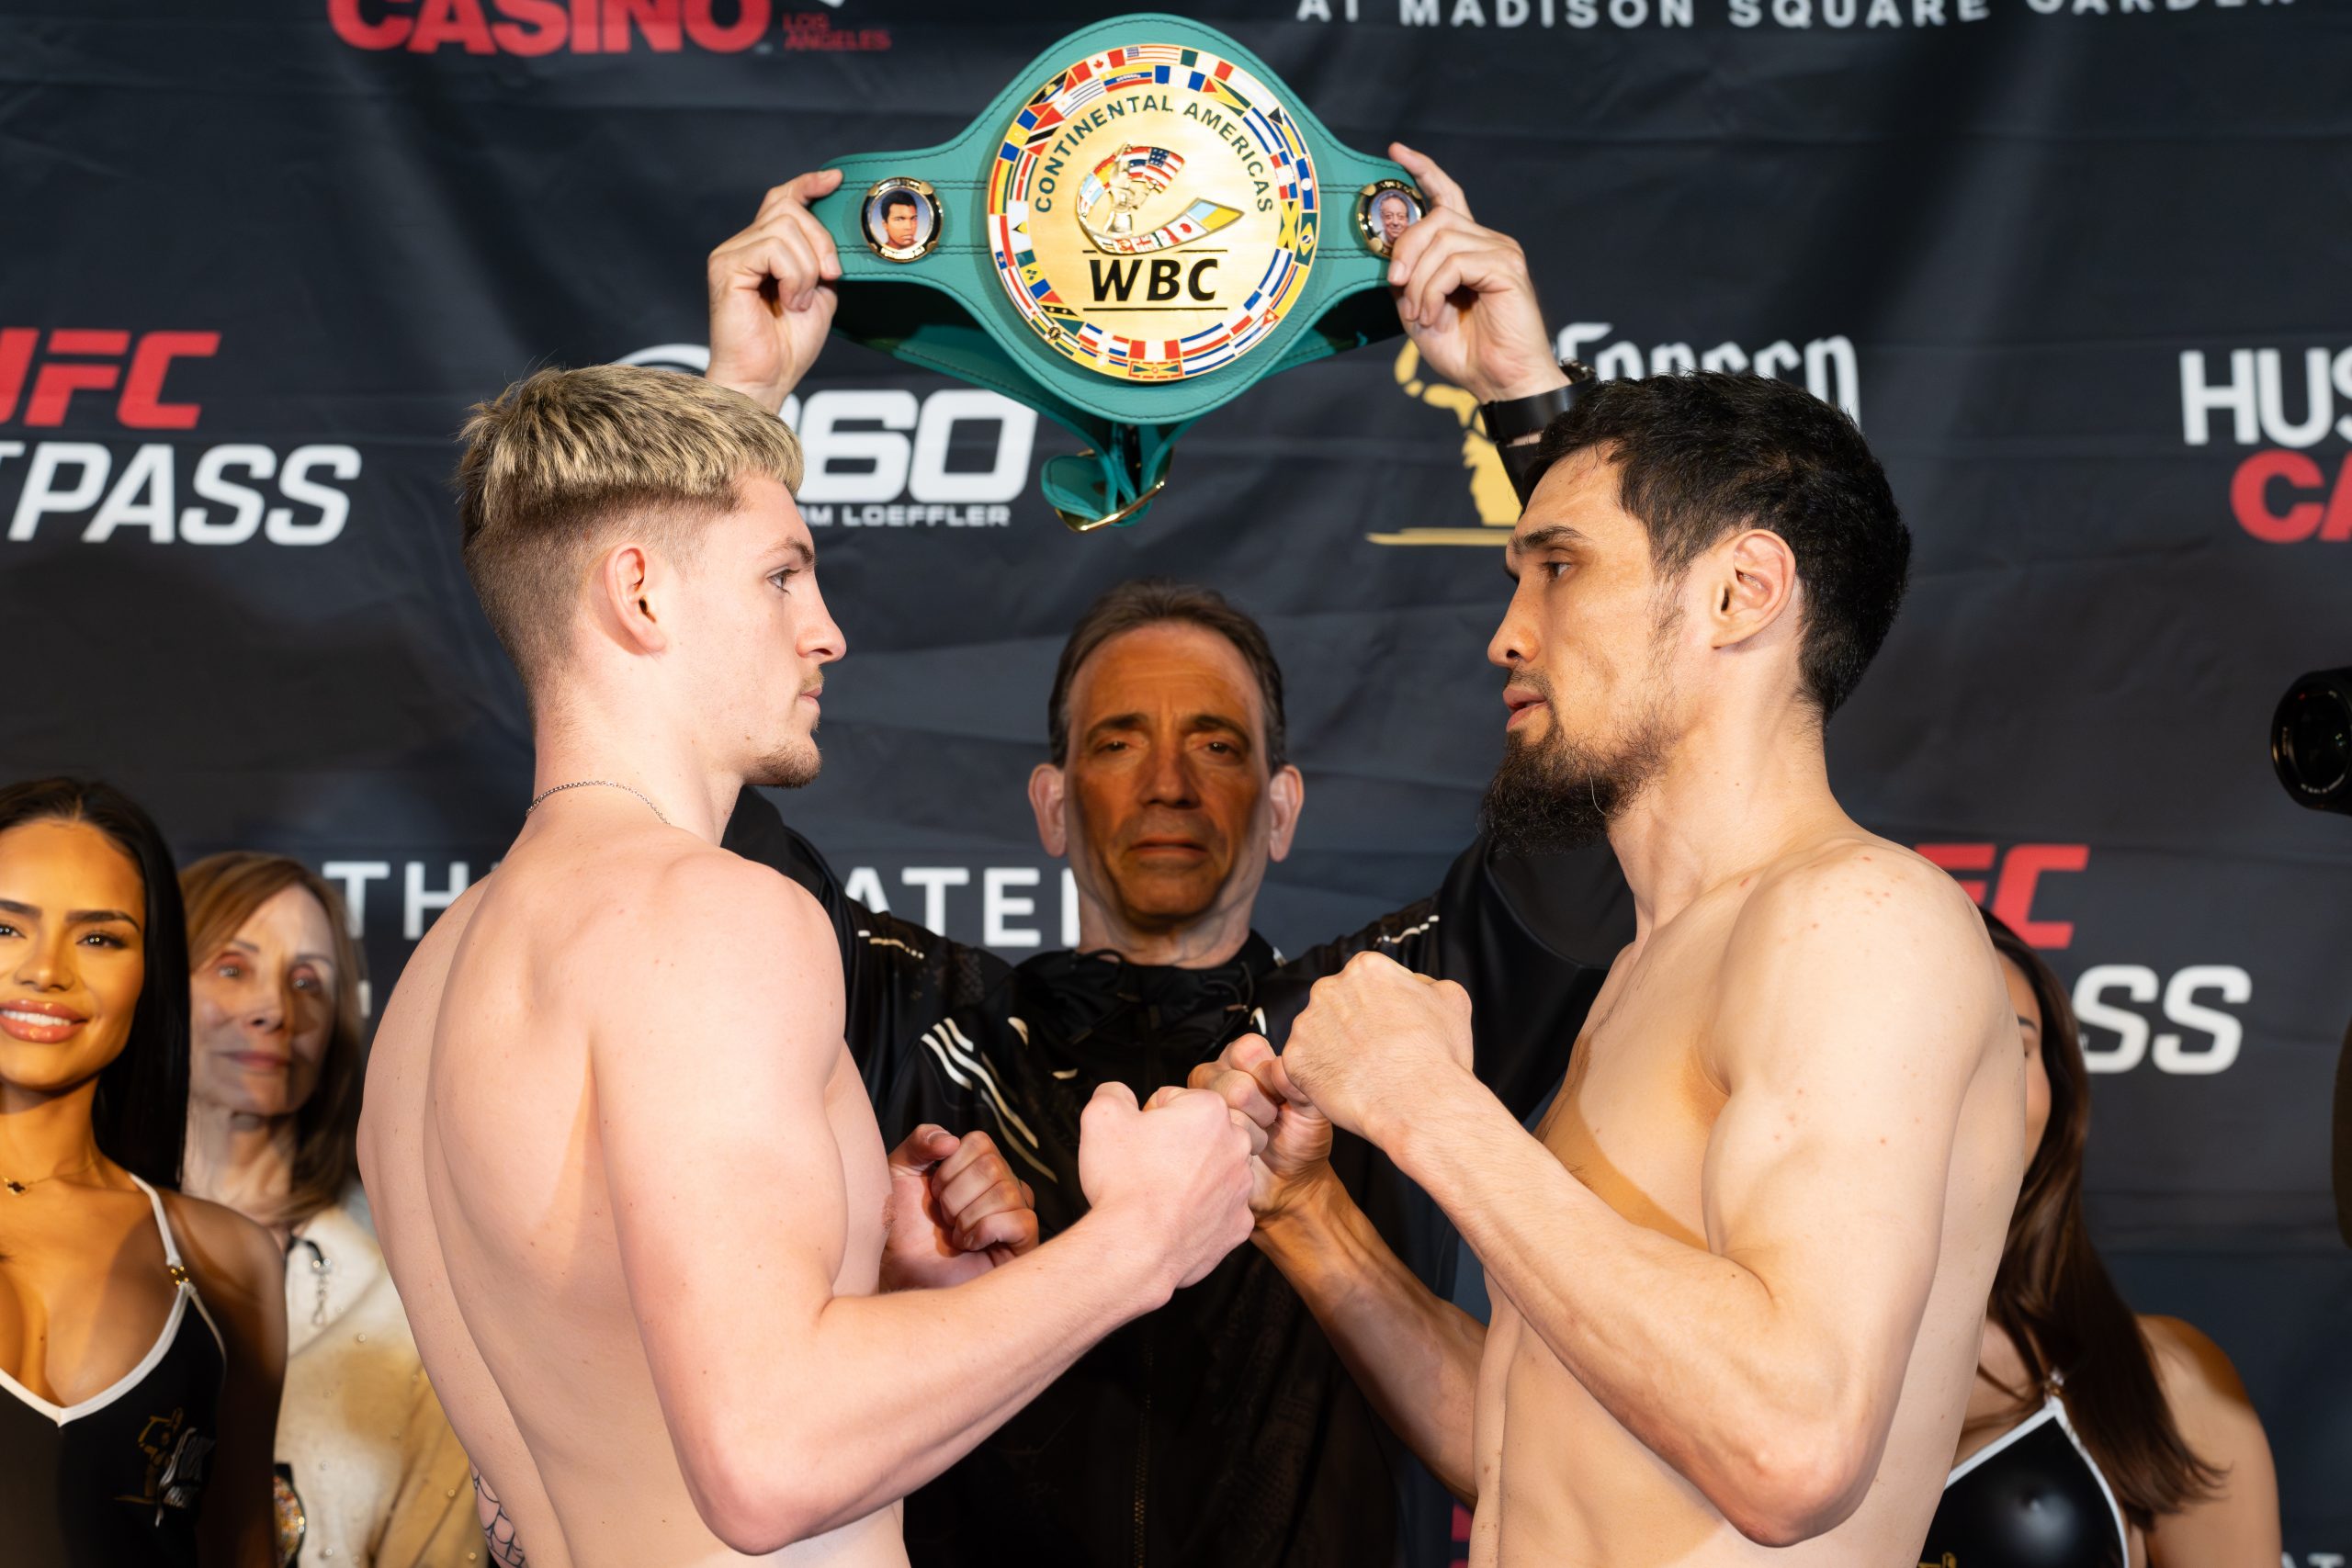 Callum Walsh, Dauren Yeleussinov both make 154-pound limit for NYC fight